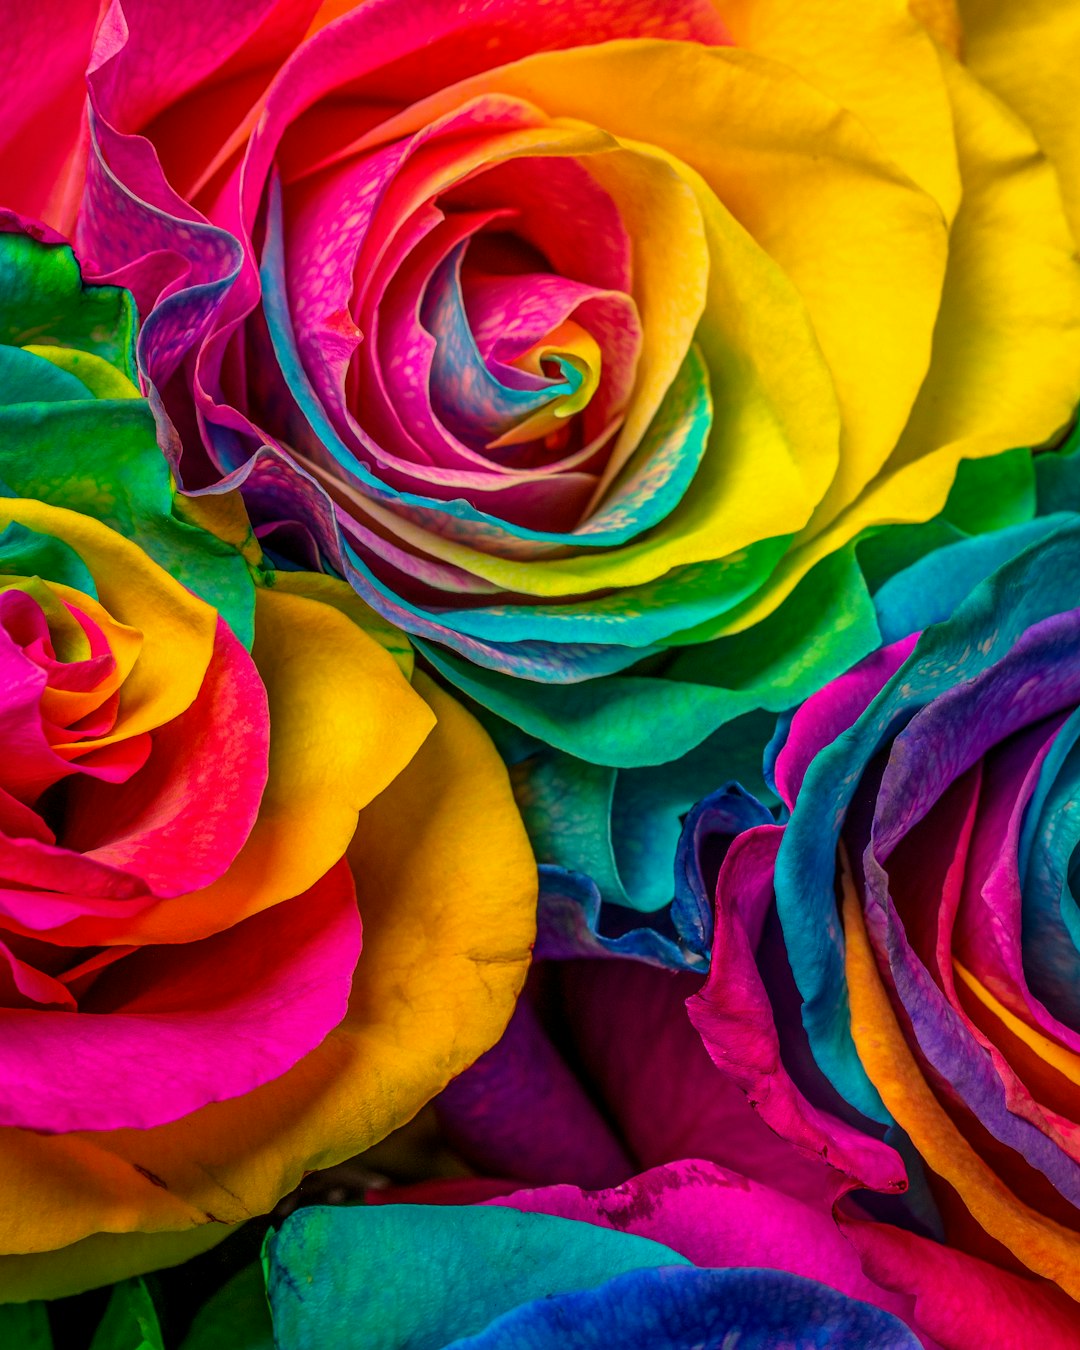 yellow pink and purple rose photo – Free Blossom Image on Unsplash